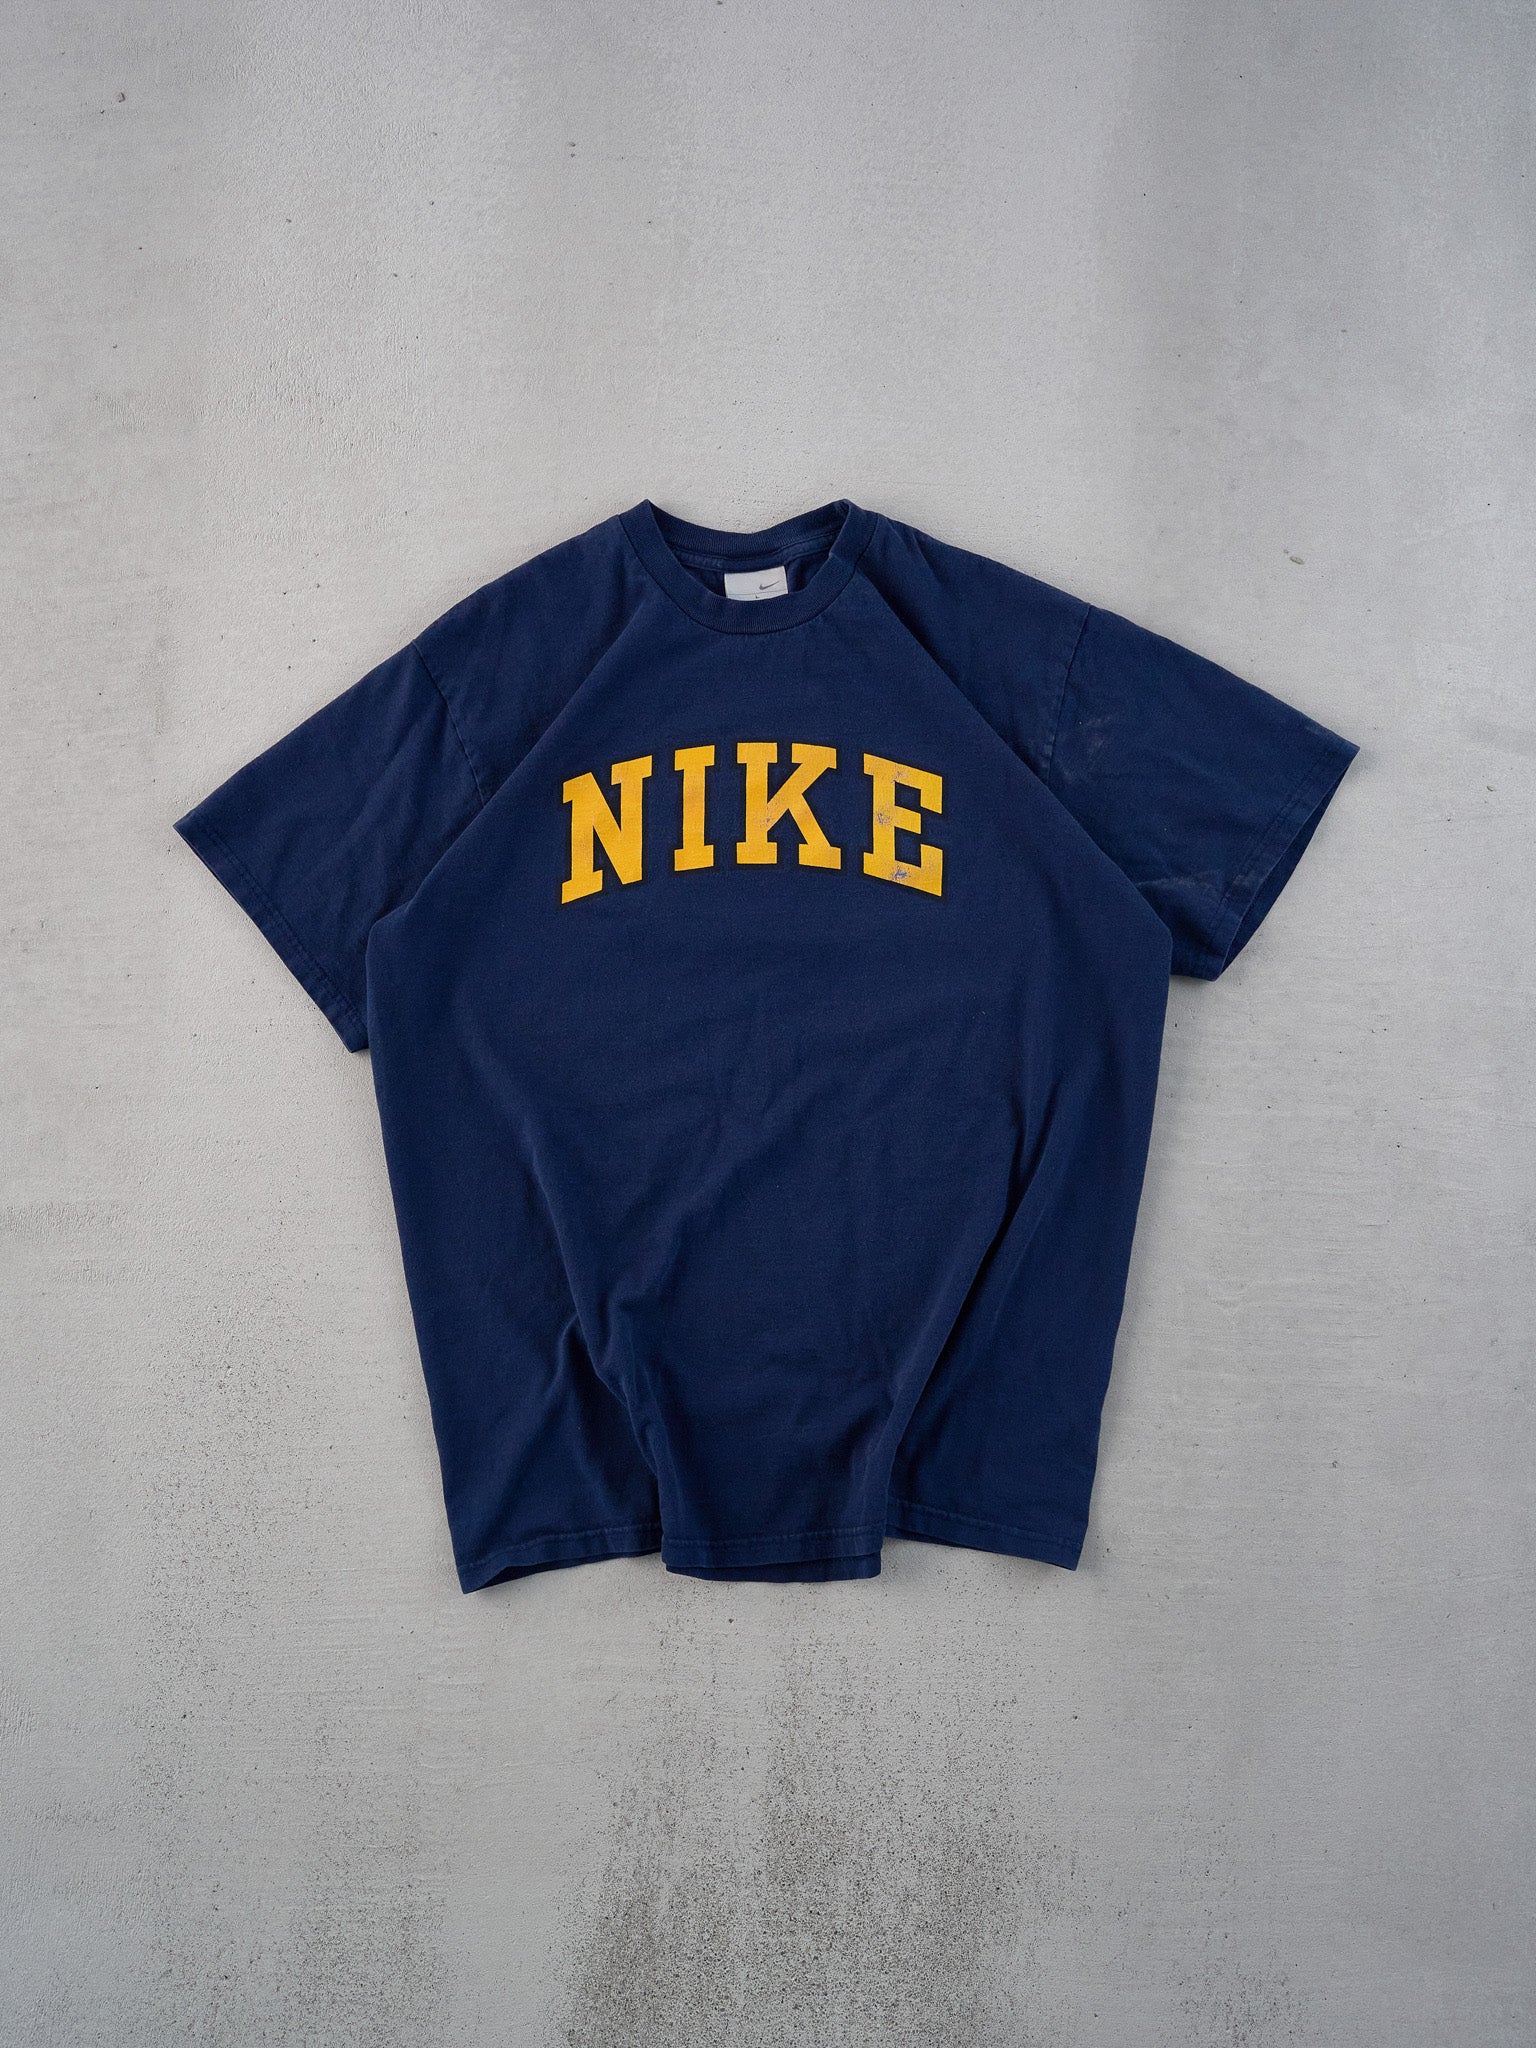 Vintage Y2k Blue and Yellow Nike Emblem Logo Tee (M)